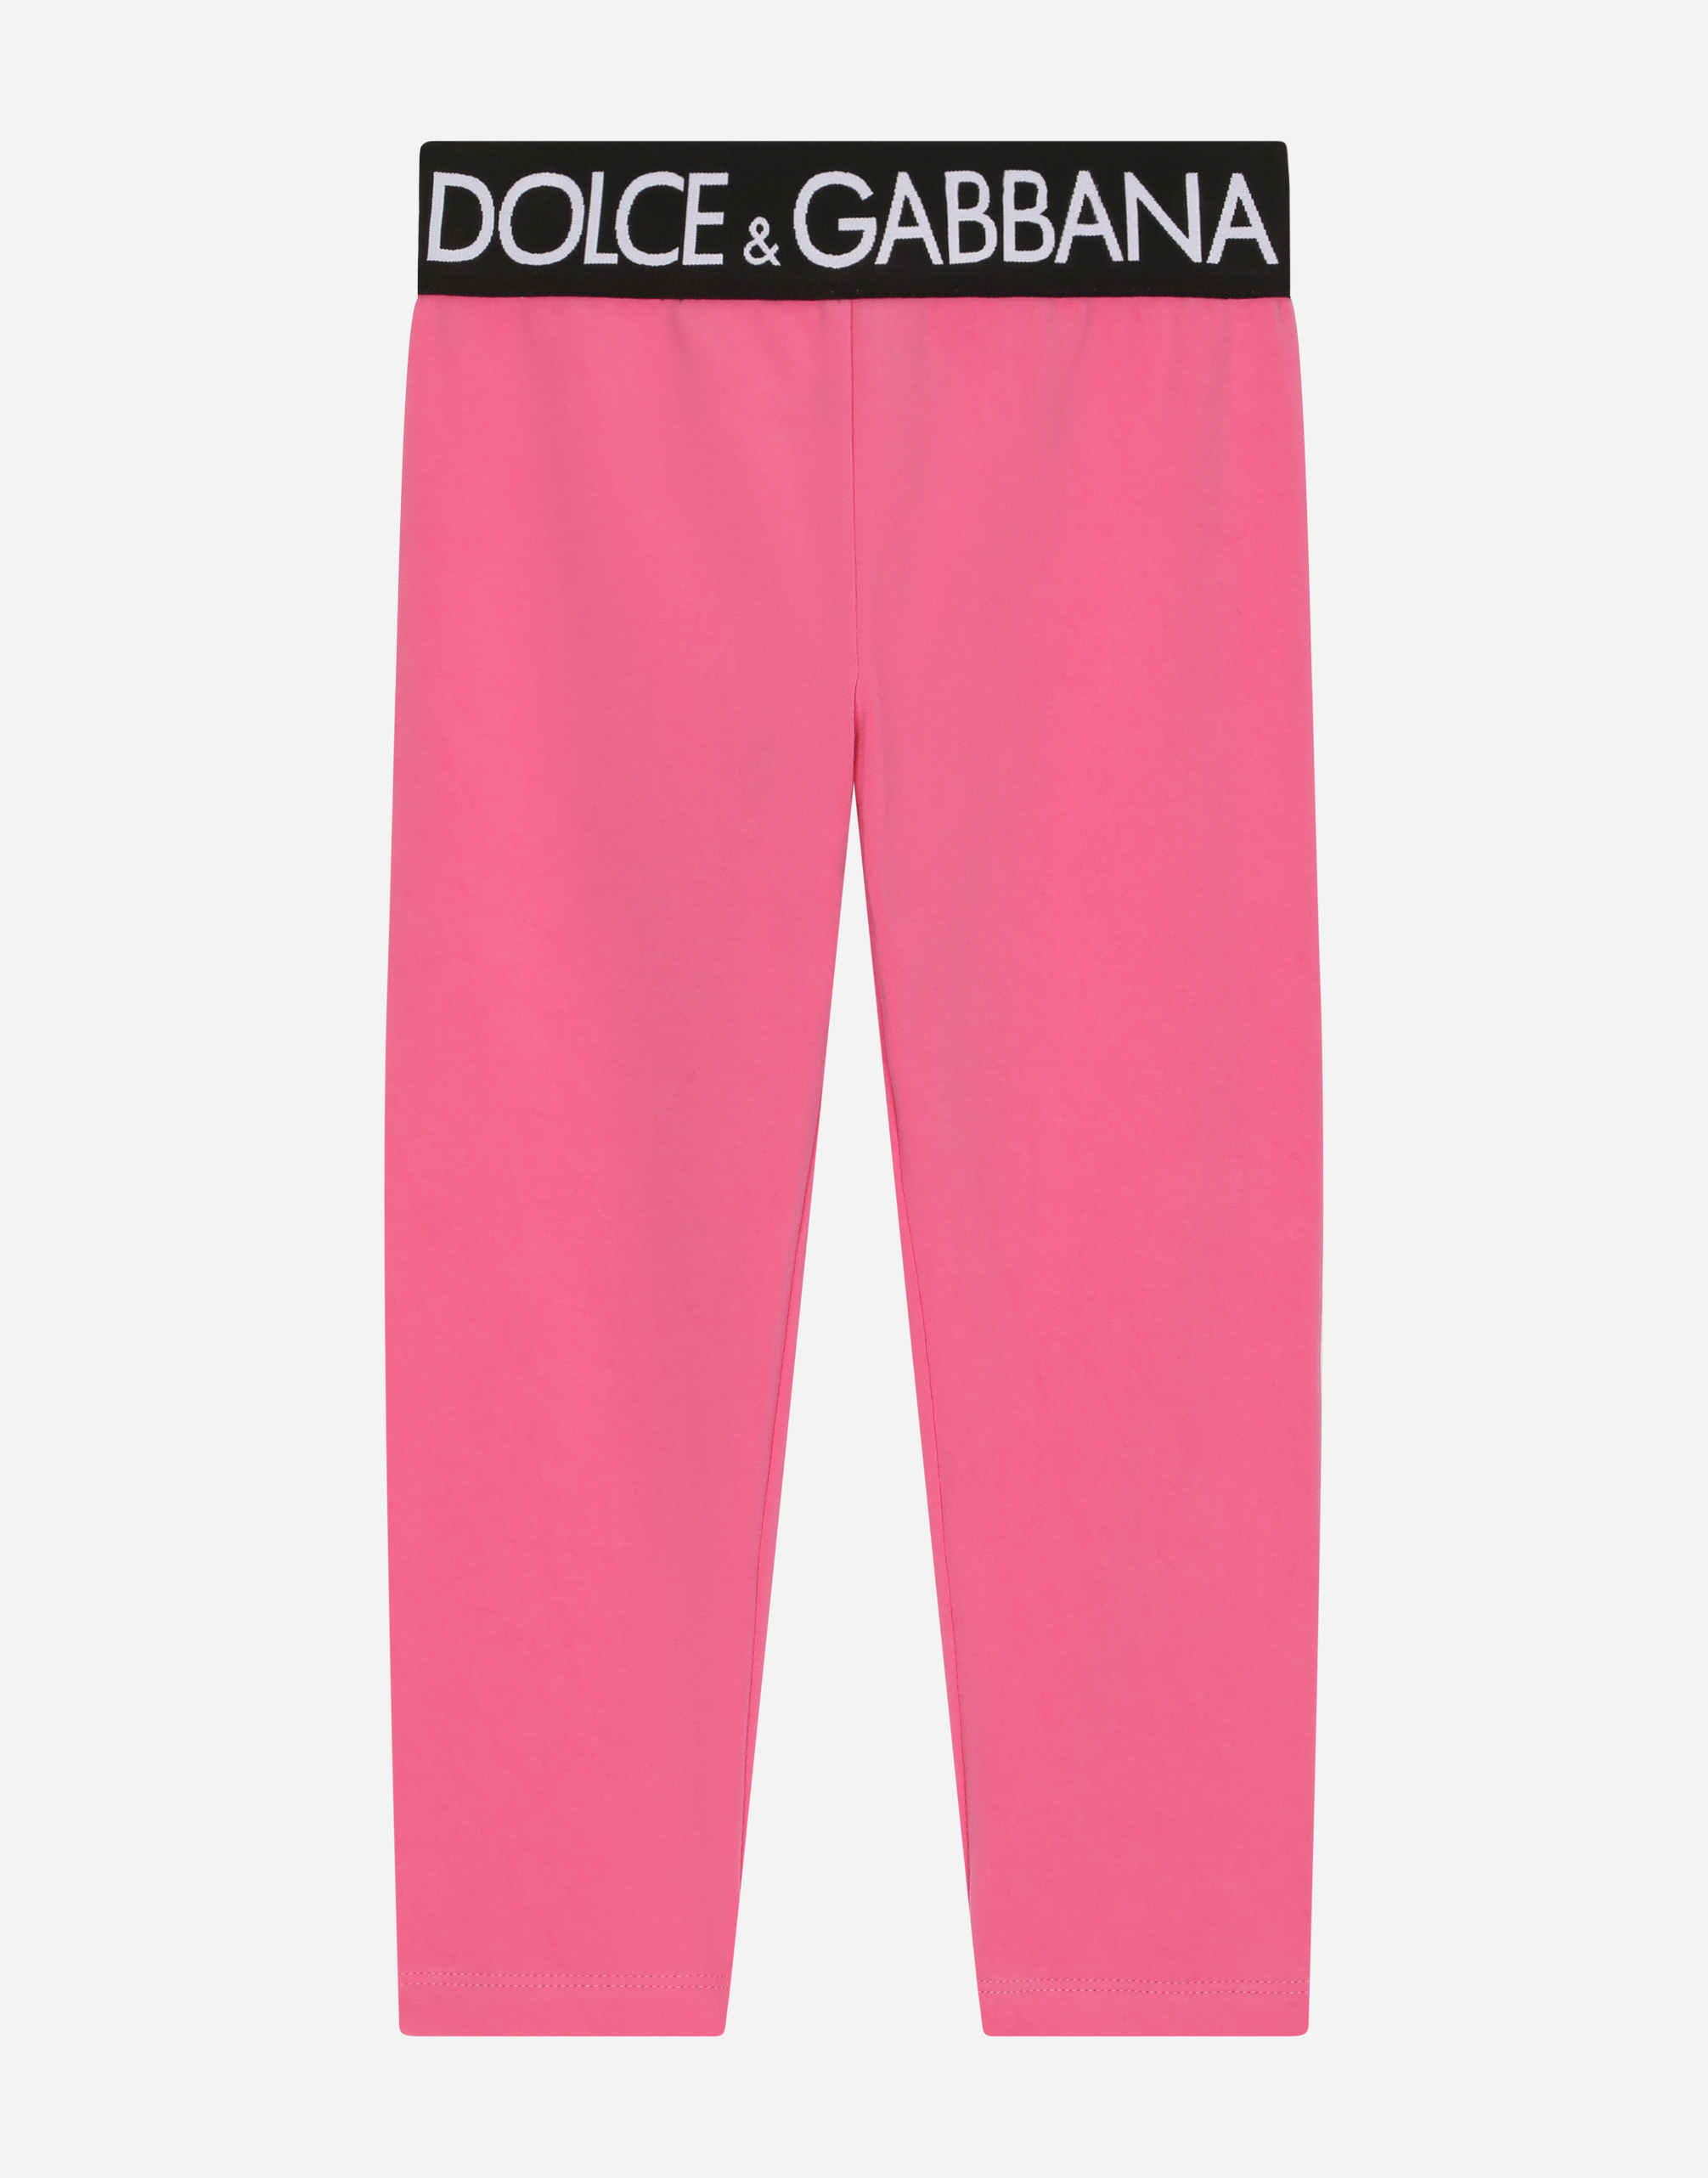 Dolce & Gabbana Kids' Interlock Leggings With Branded Elastic In Pink